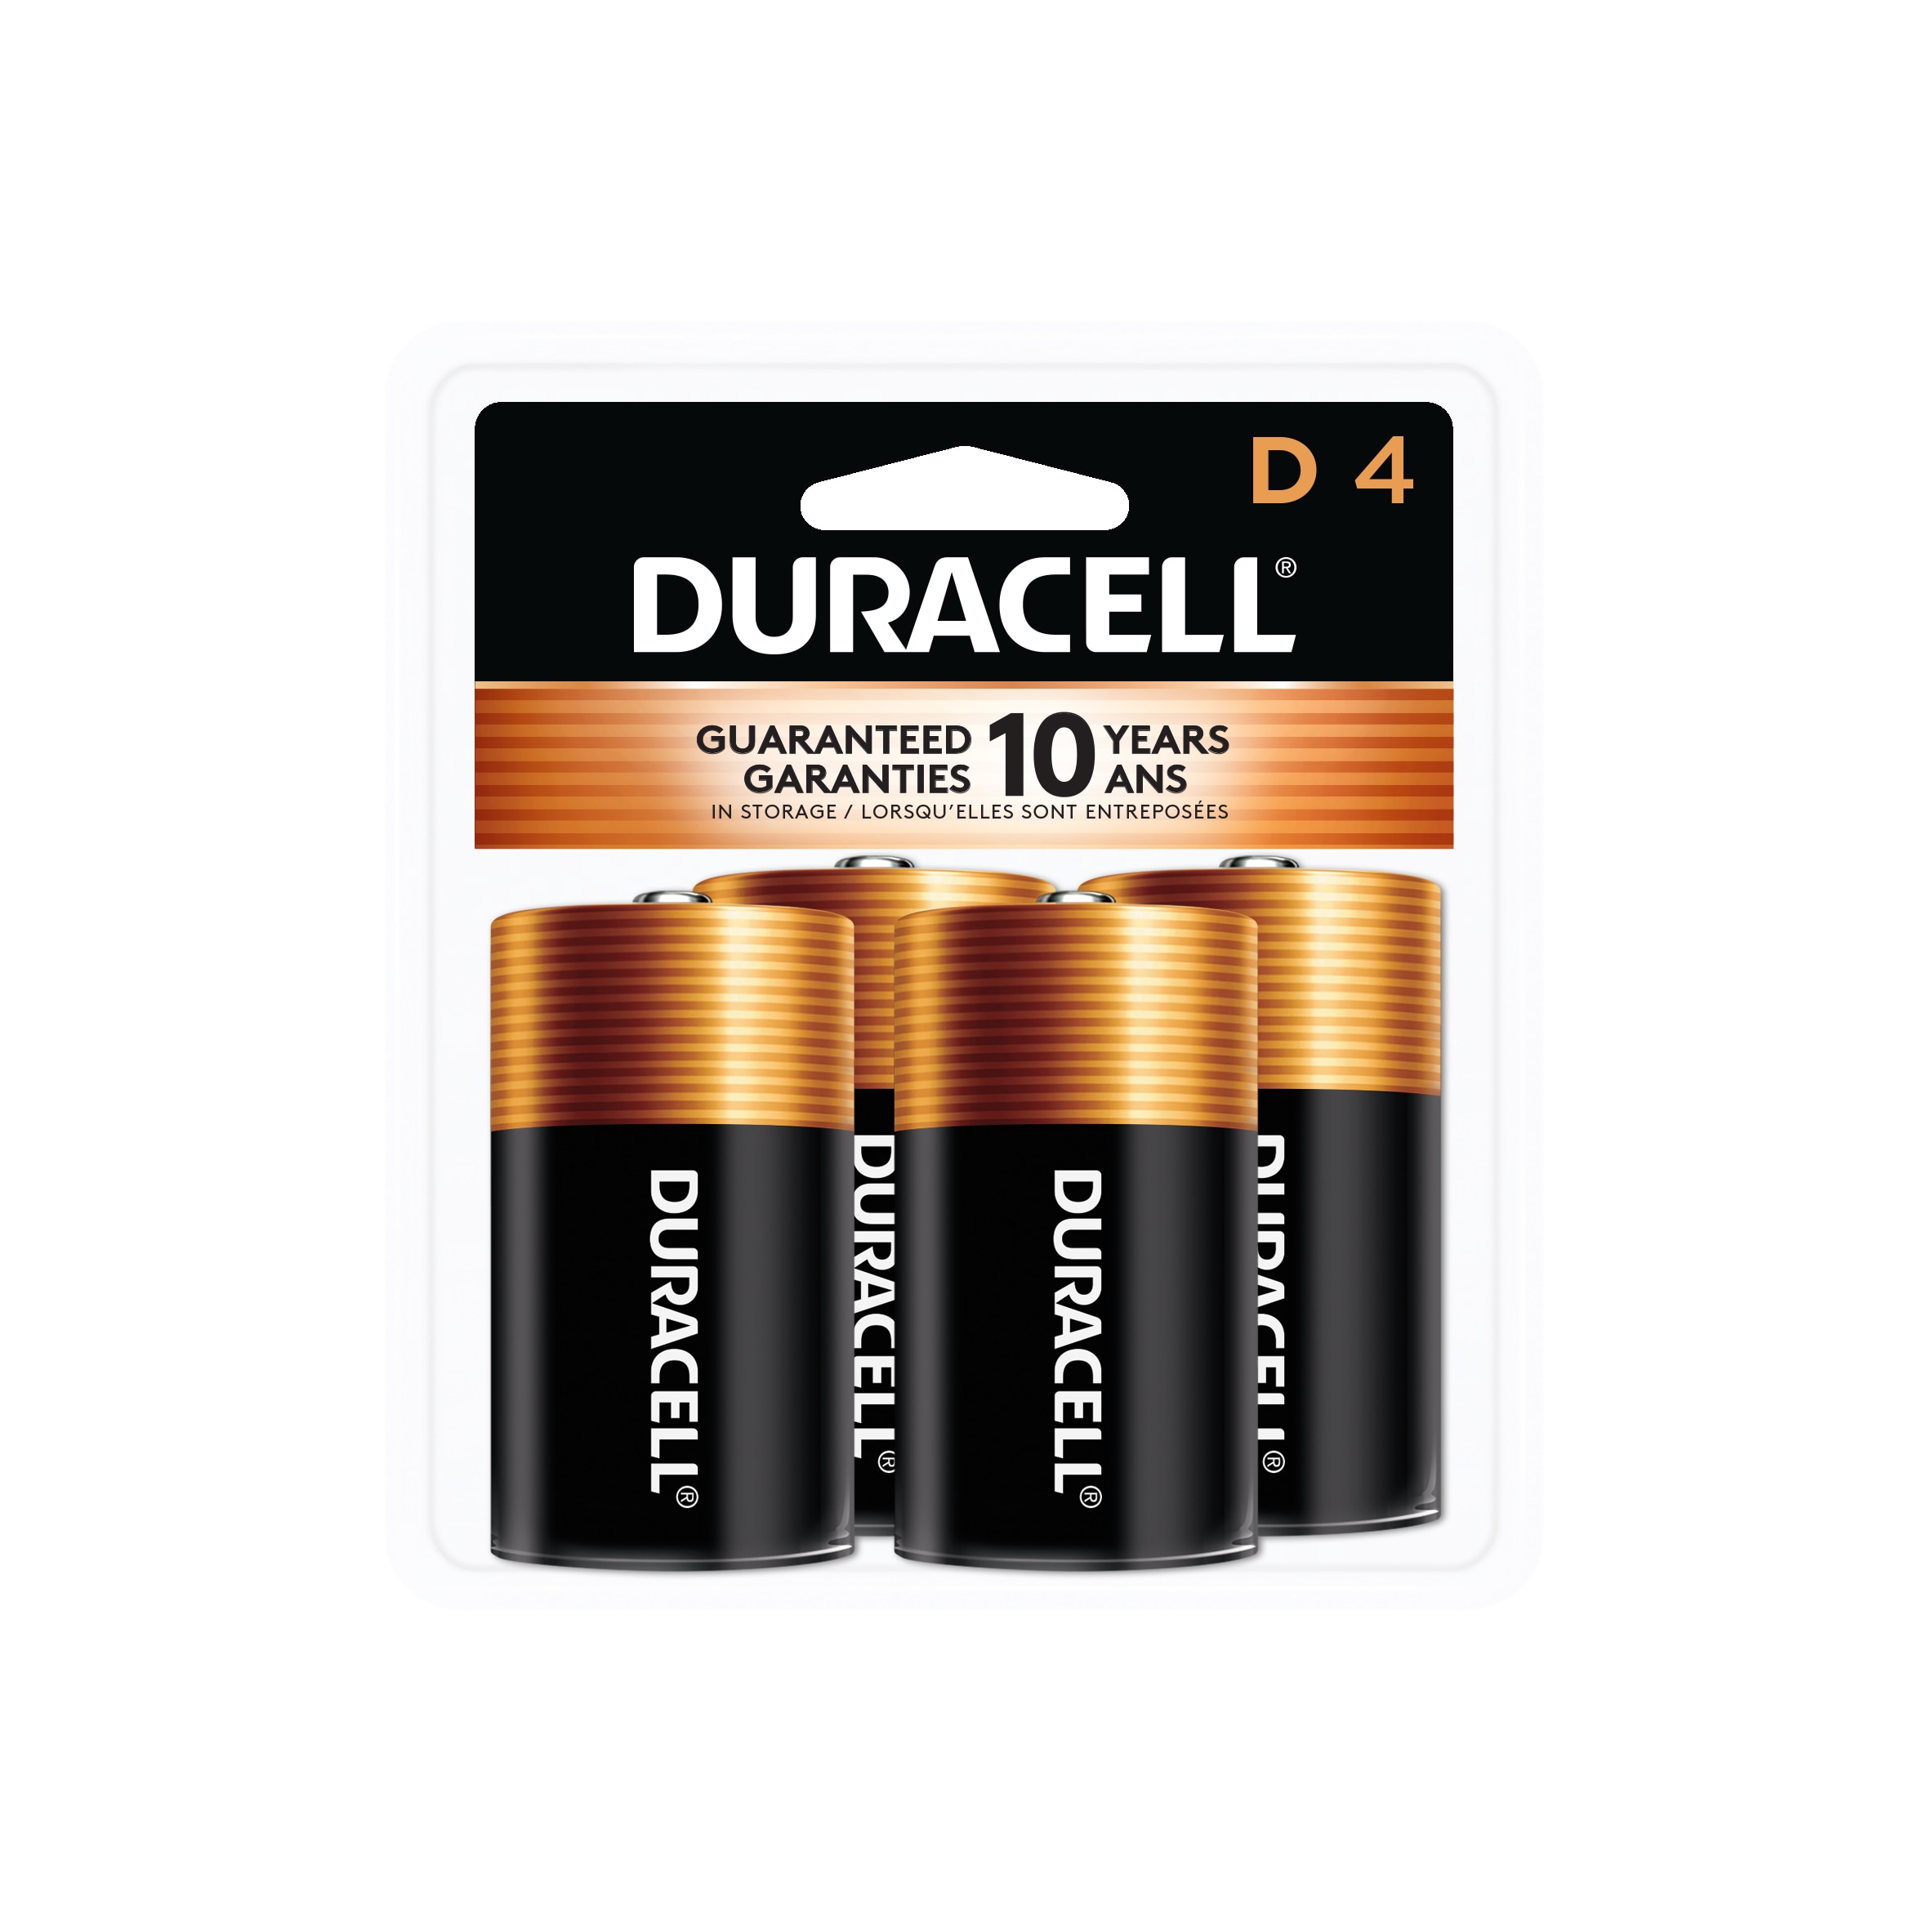 Duracell Coppertop 9V Battery, Long Lasting Batteries, 4 Pack